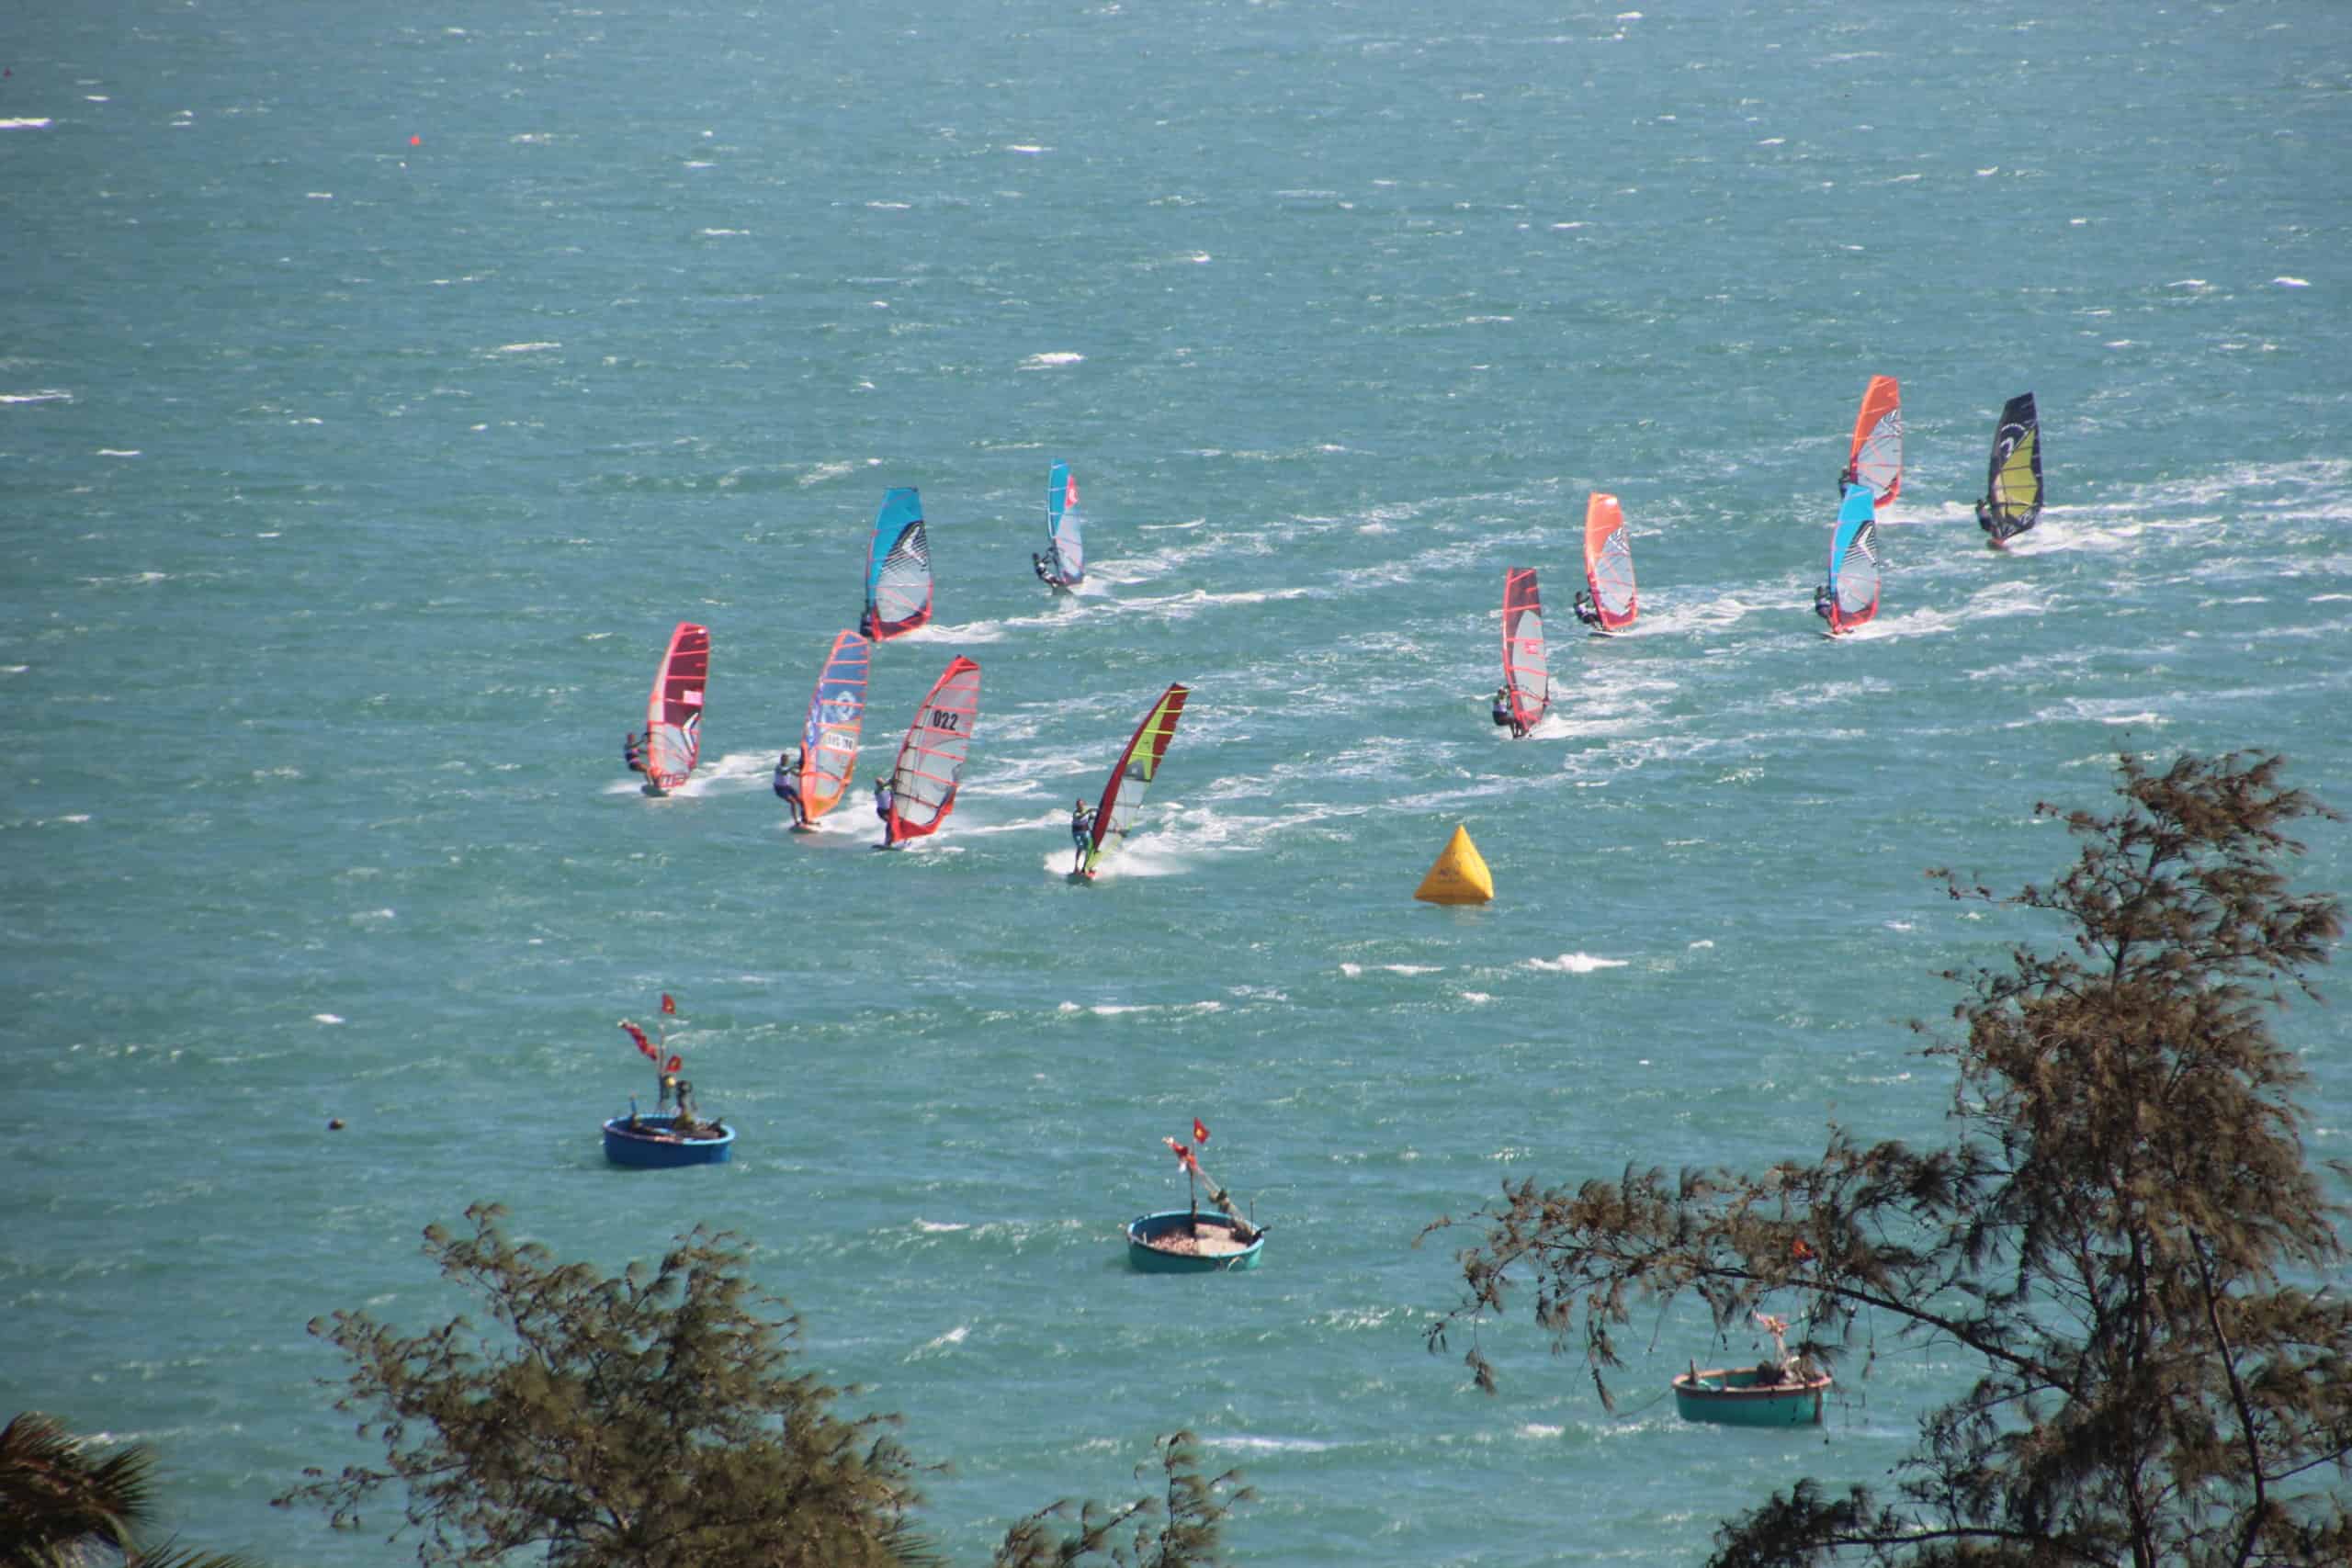 Event Report – Vietnam Fun Cup - 3 - Windsurf